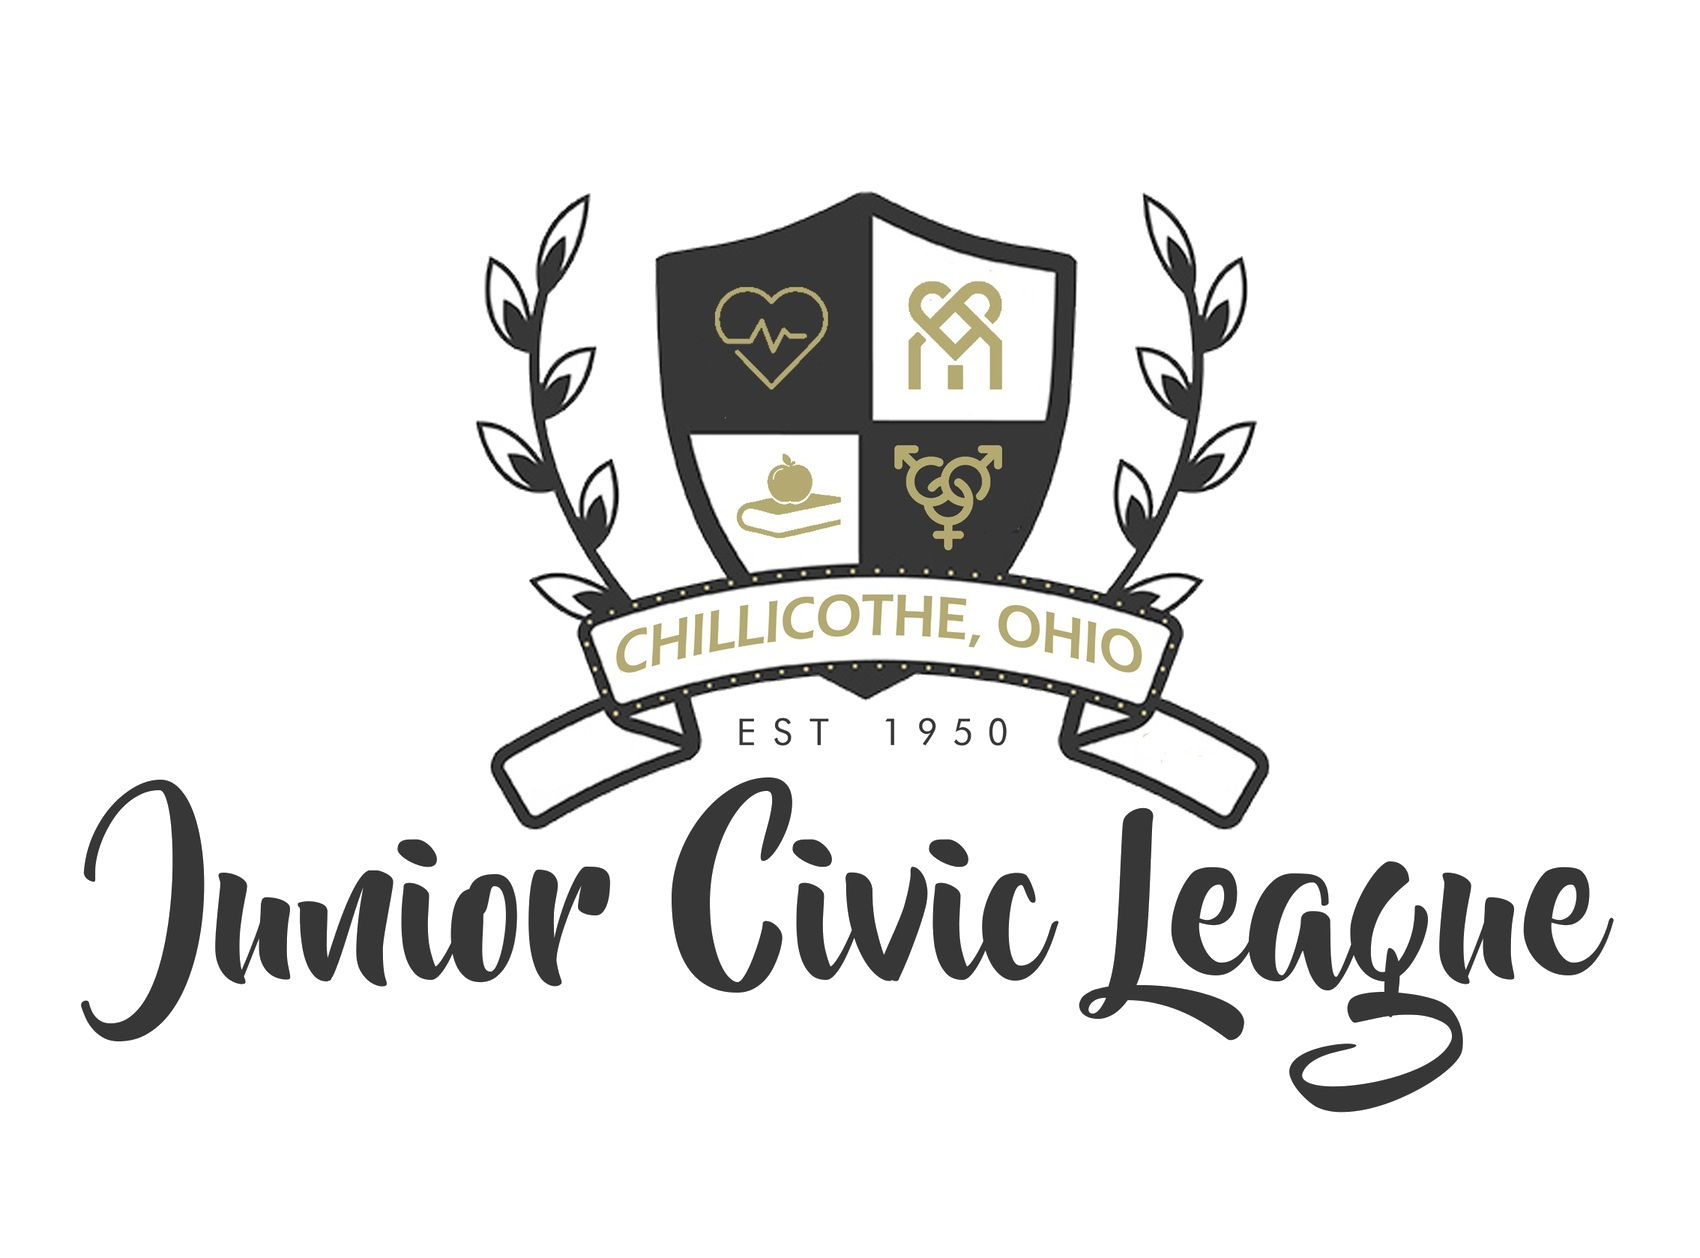 Chillicothe Junior Civic League